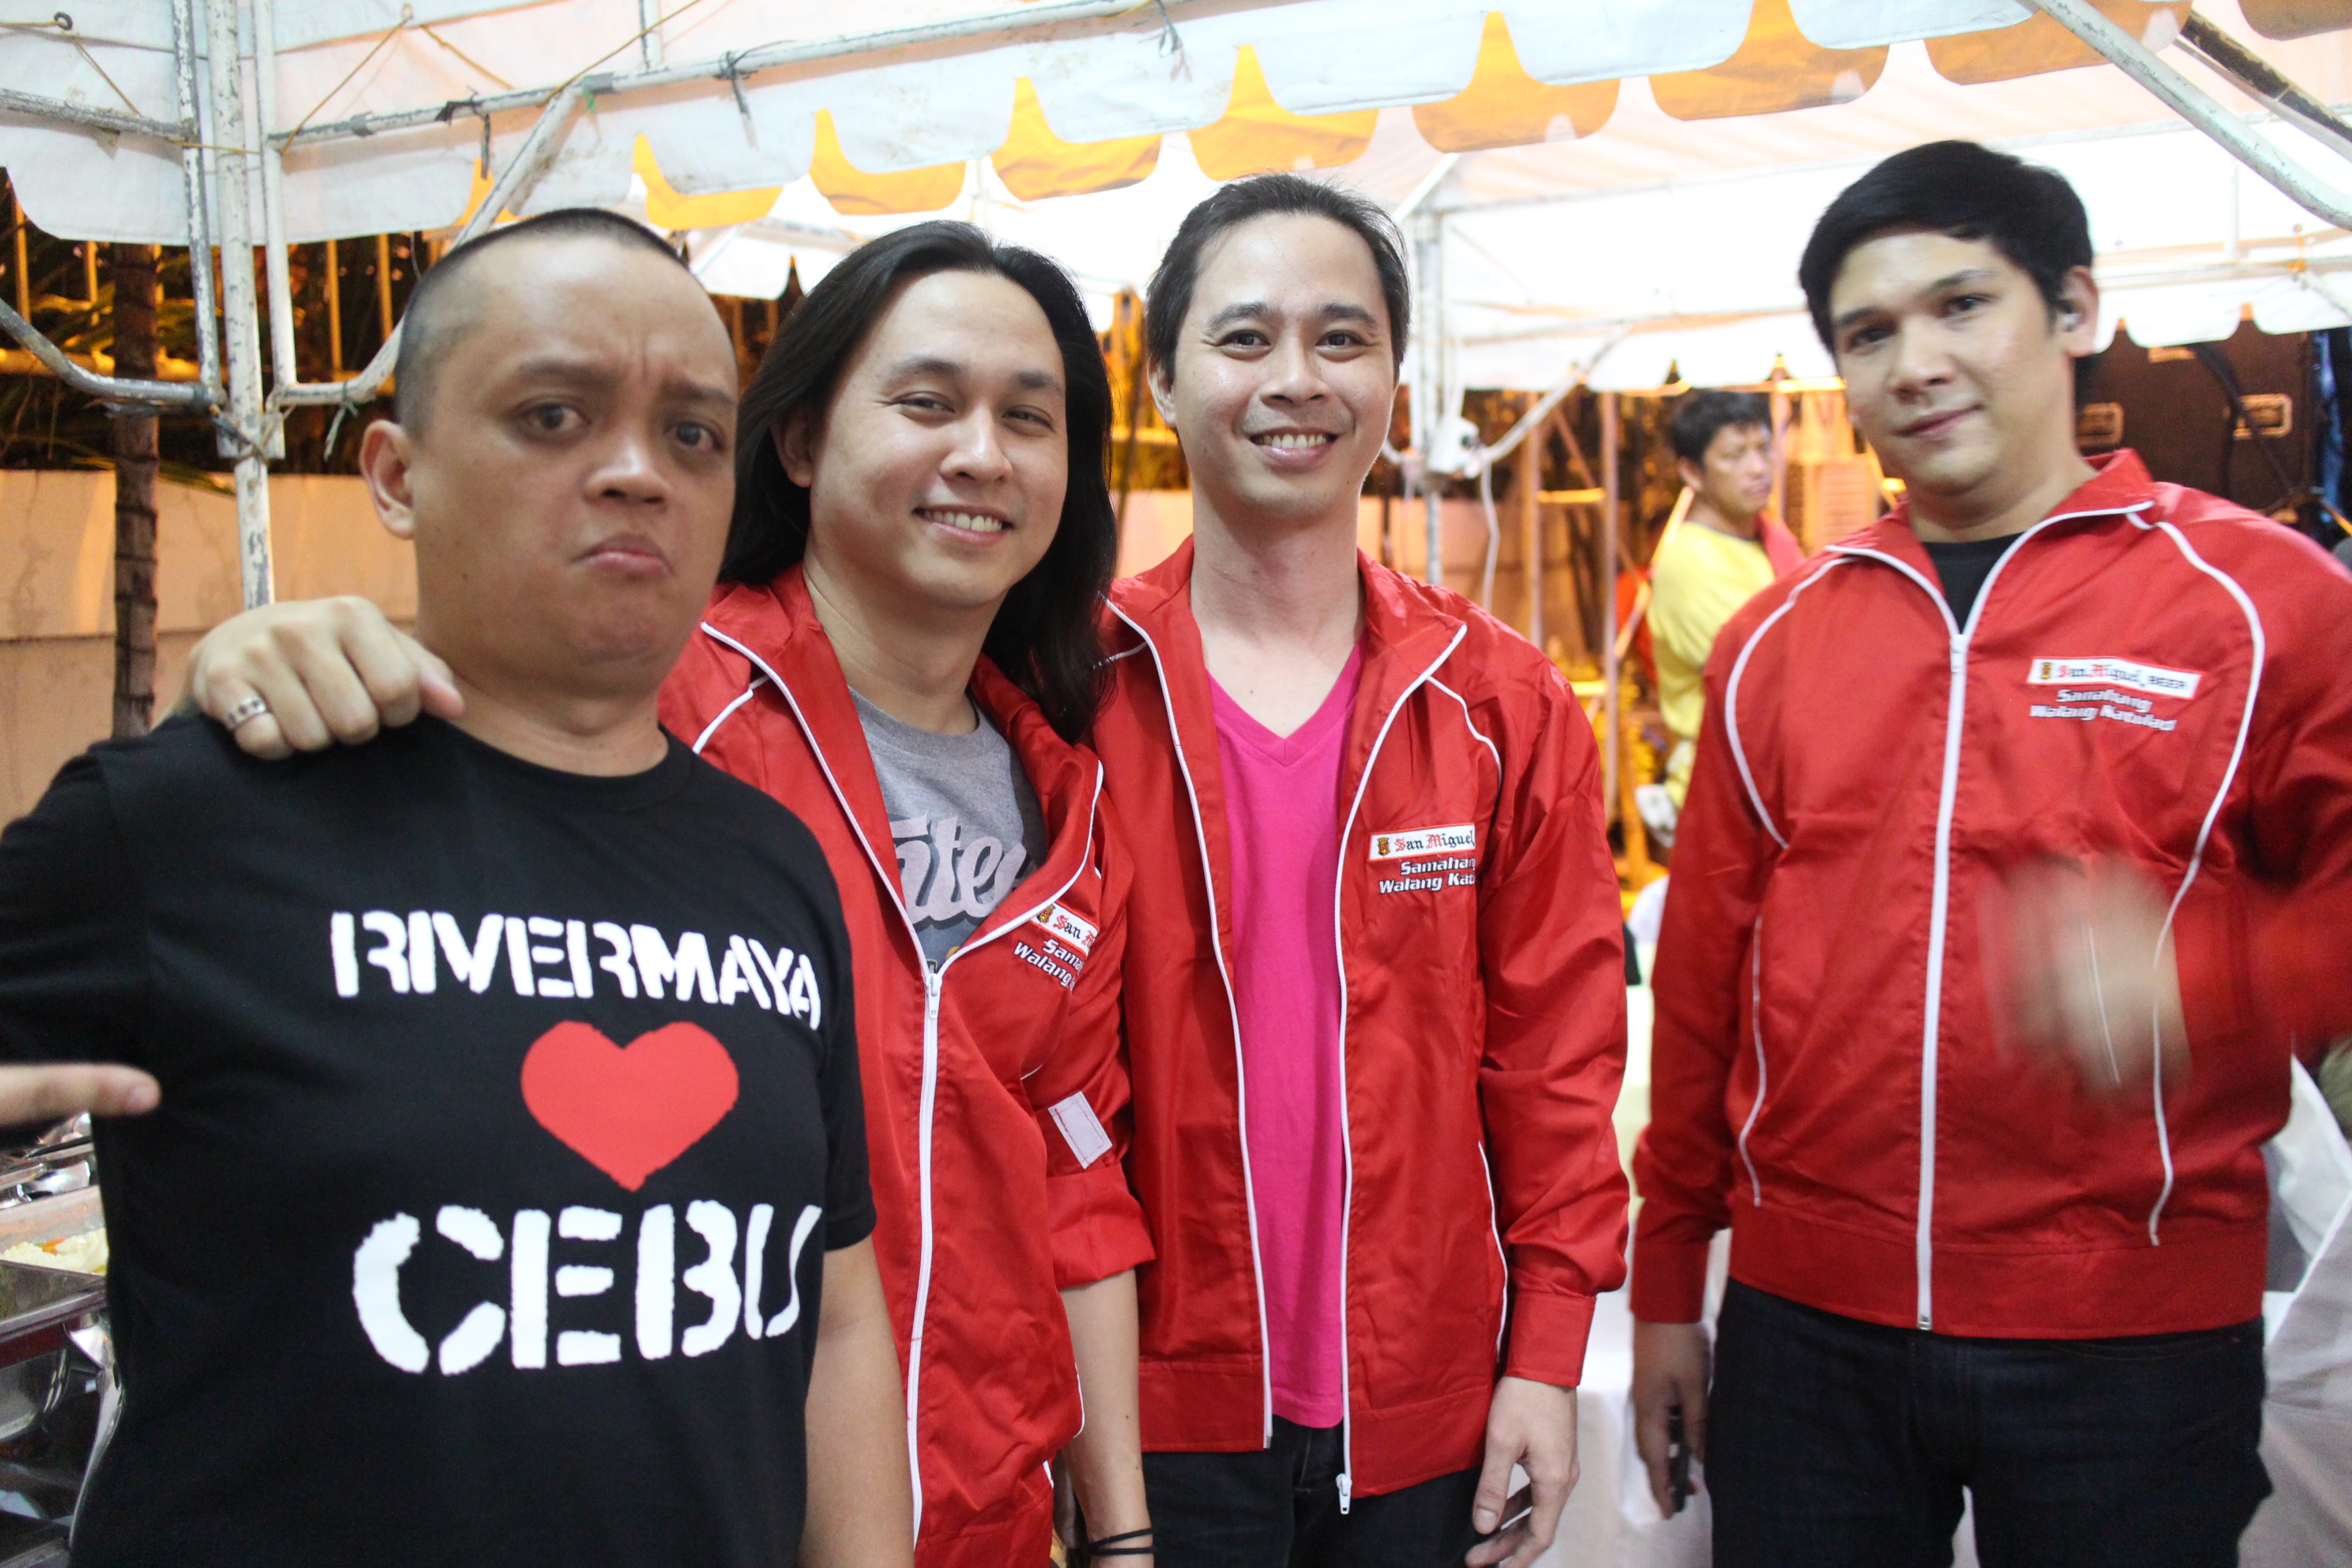 PHOTOS: Catching Up With Rivermaya band in Cebu